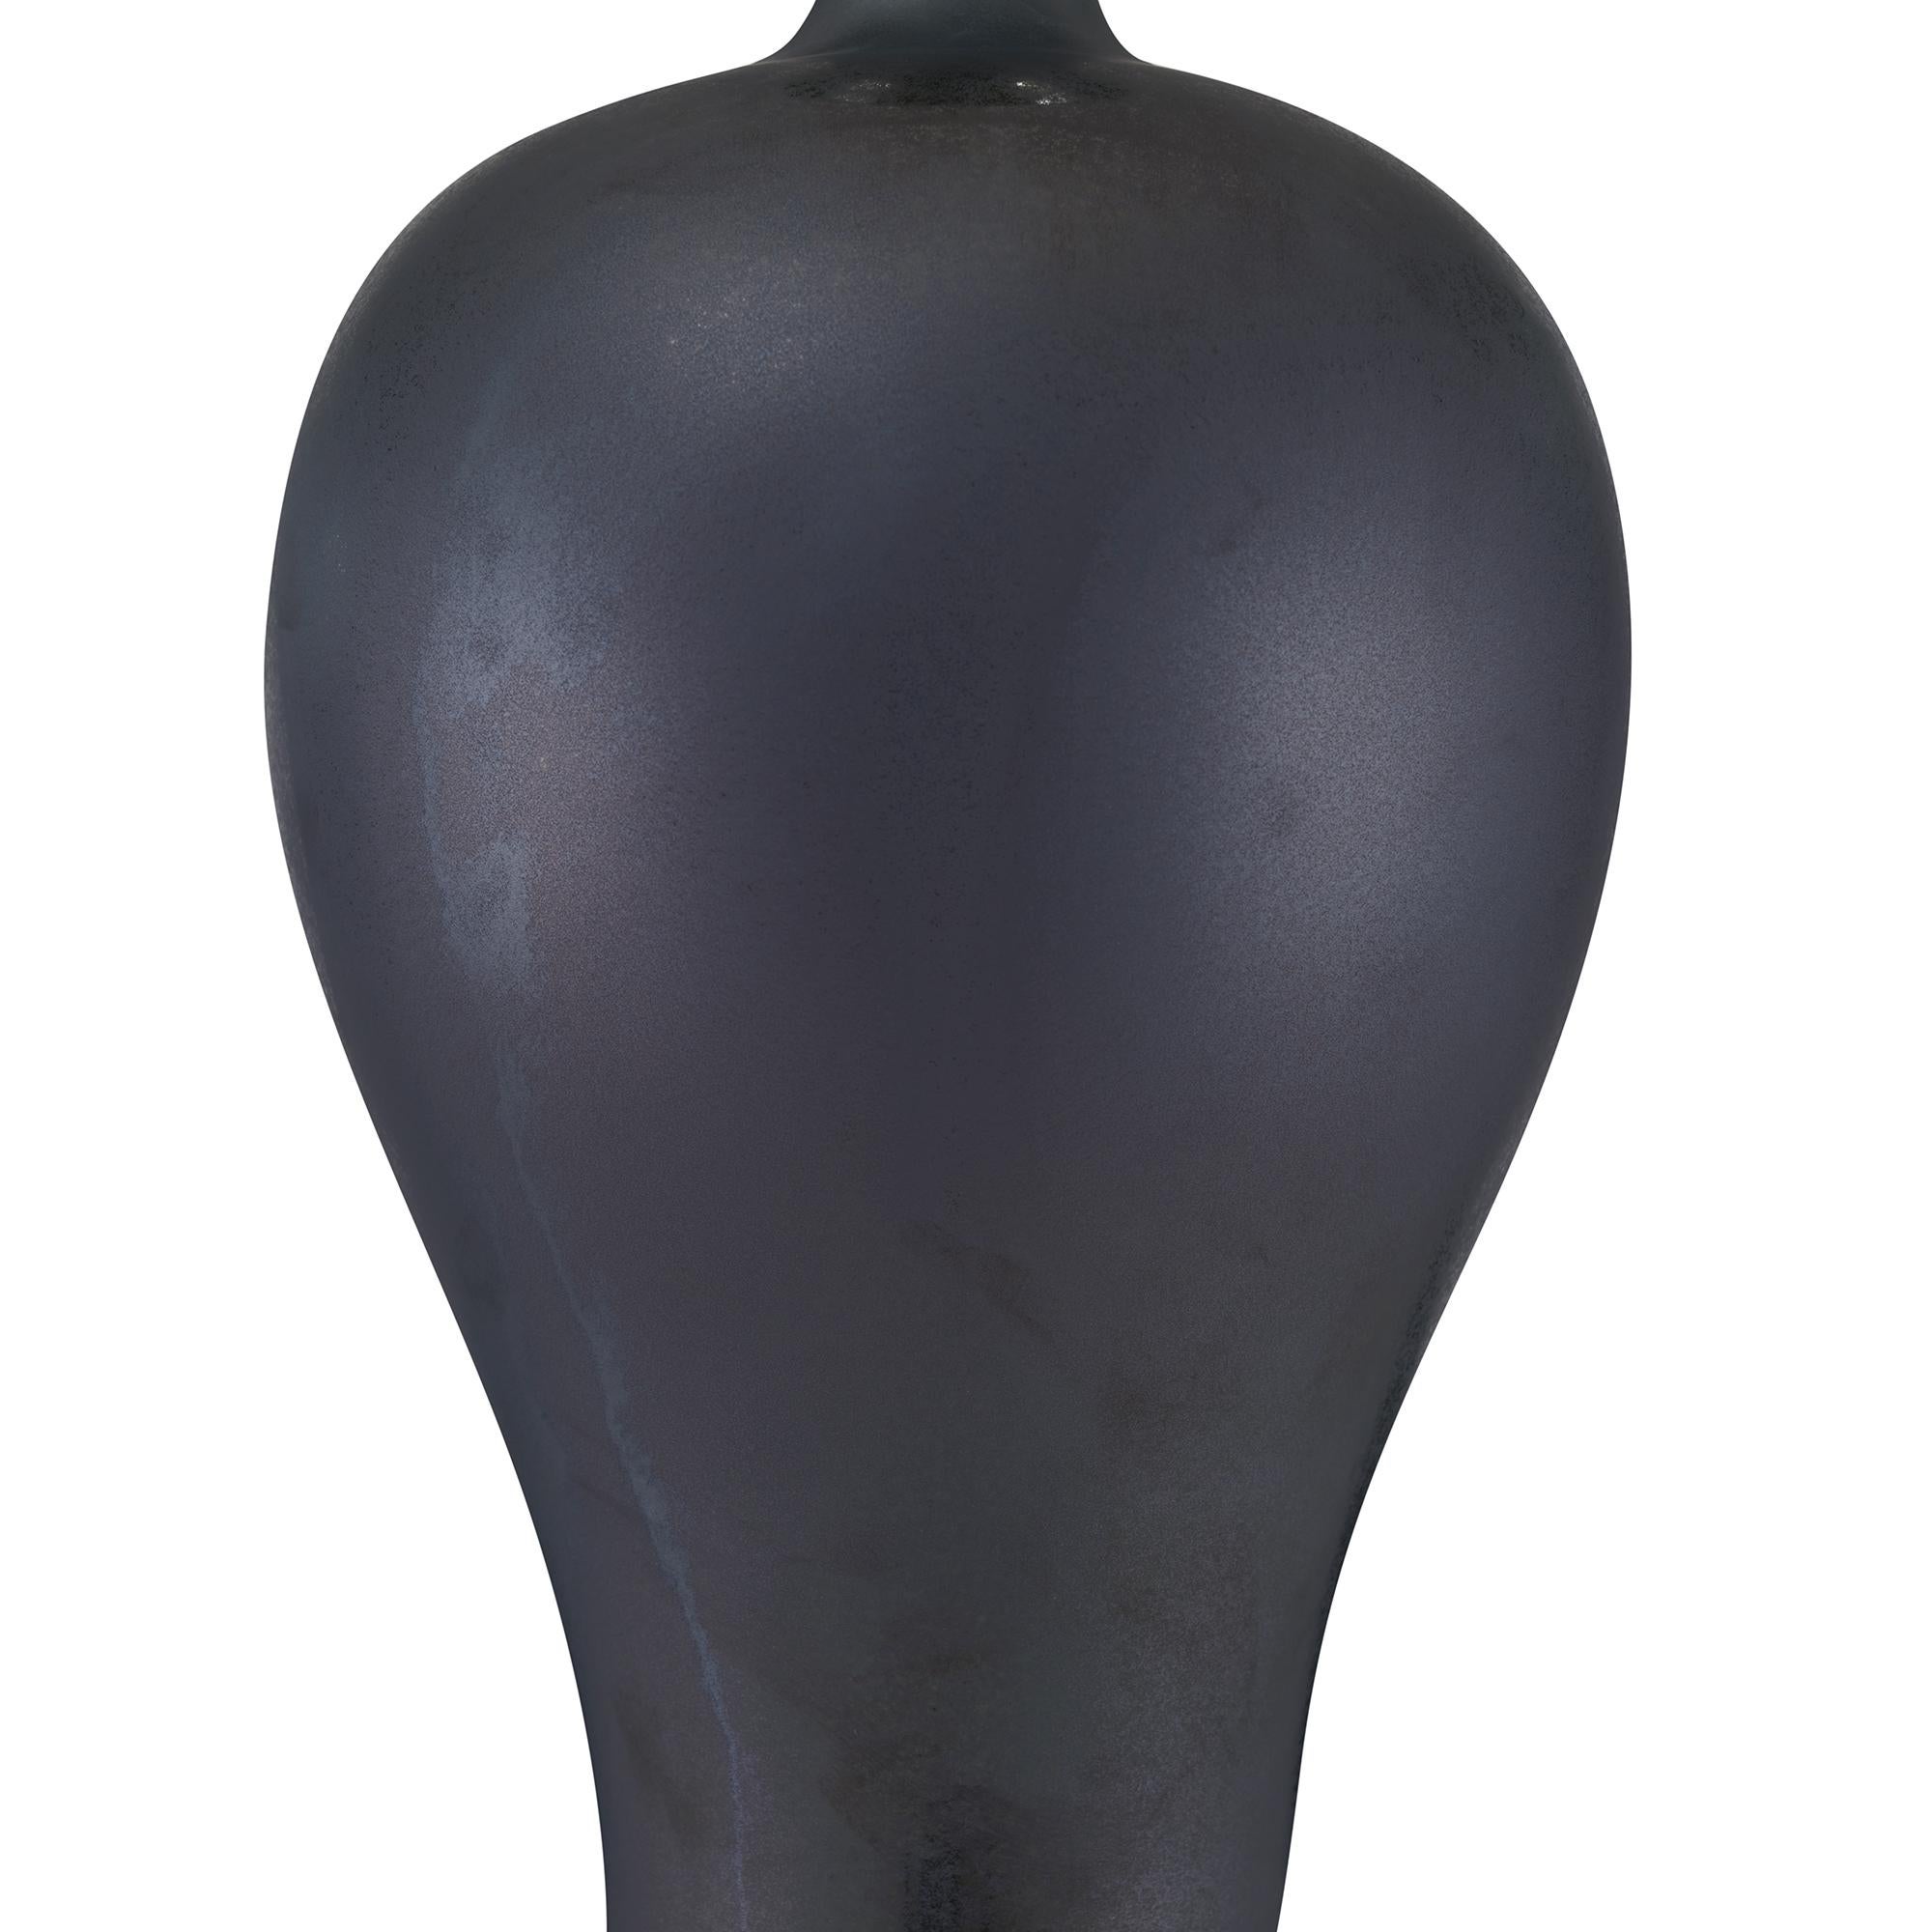 (Black) Quarry Vase in Ceramic by CuratedKravet 2